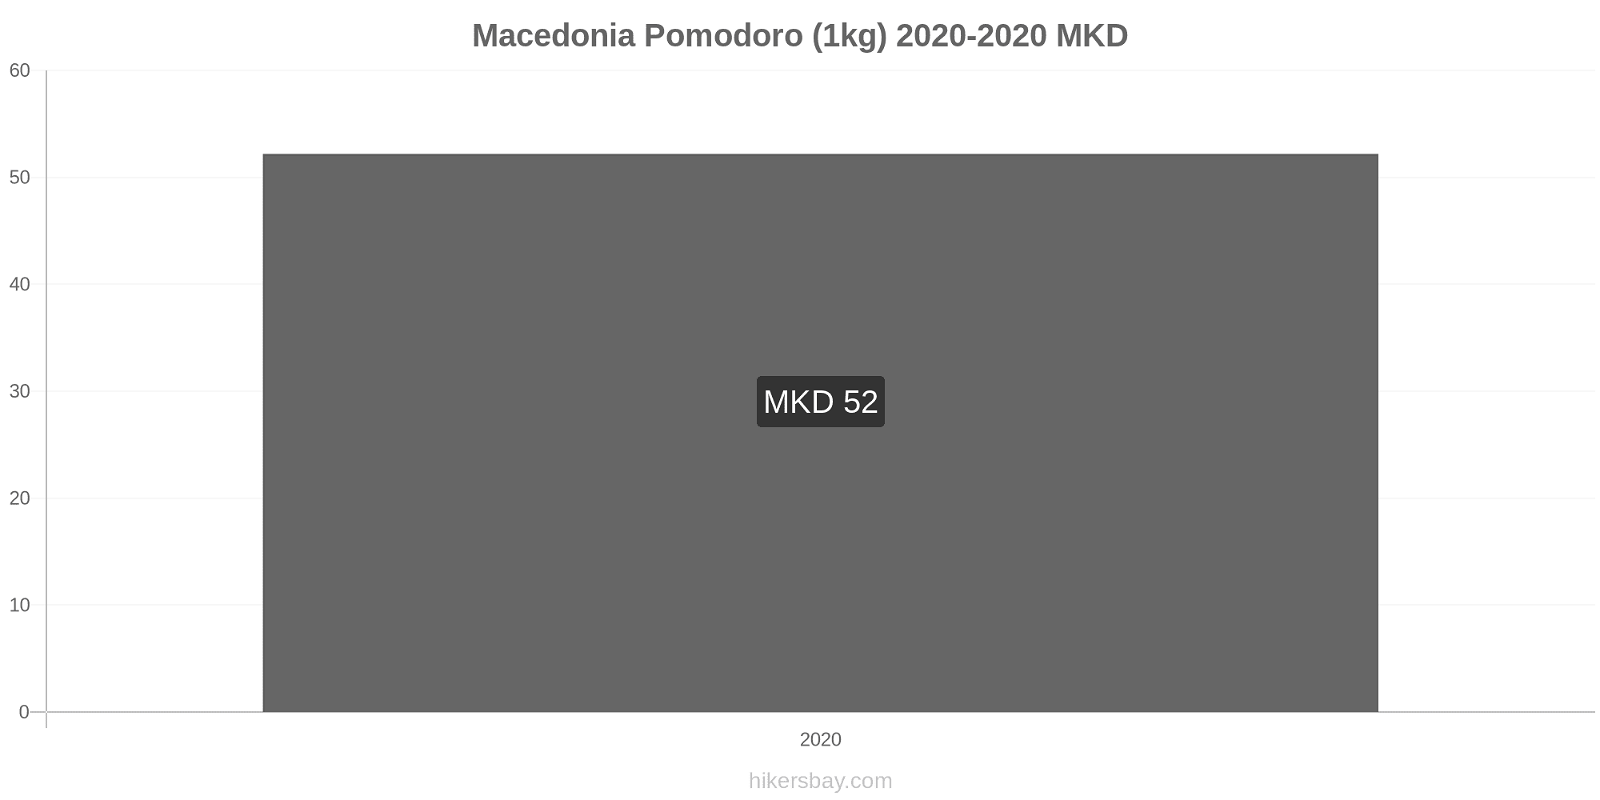 Macedonia variazioni di prezzo Pomodoro (1kg) hikersbay.com